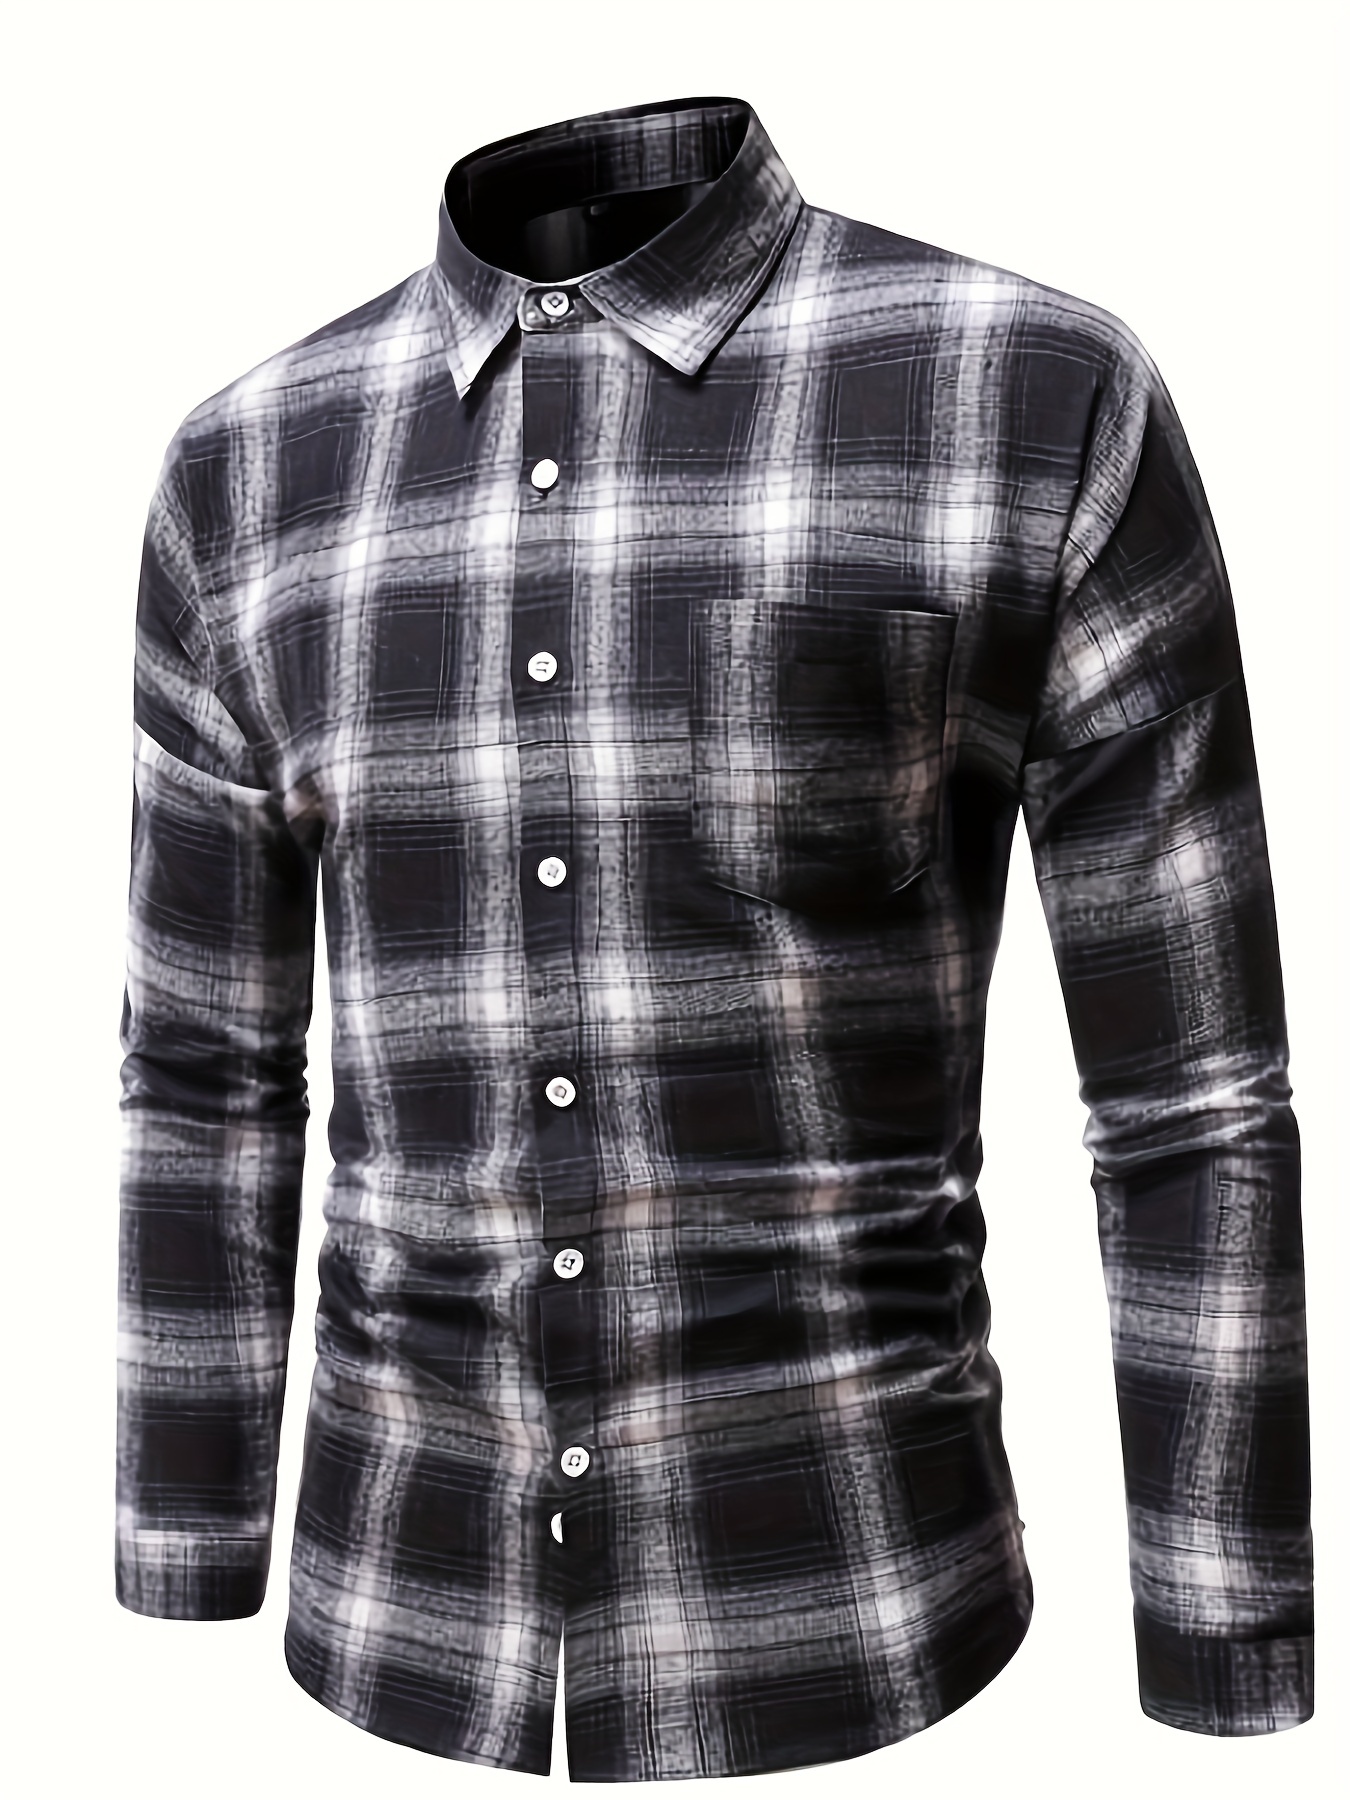 Chic Retro Plaid Shirt Men's Casual Button Long Sleeve Shirt